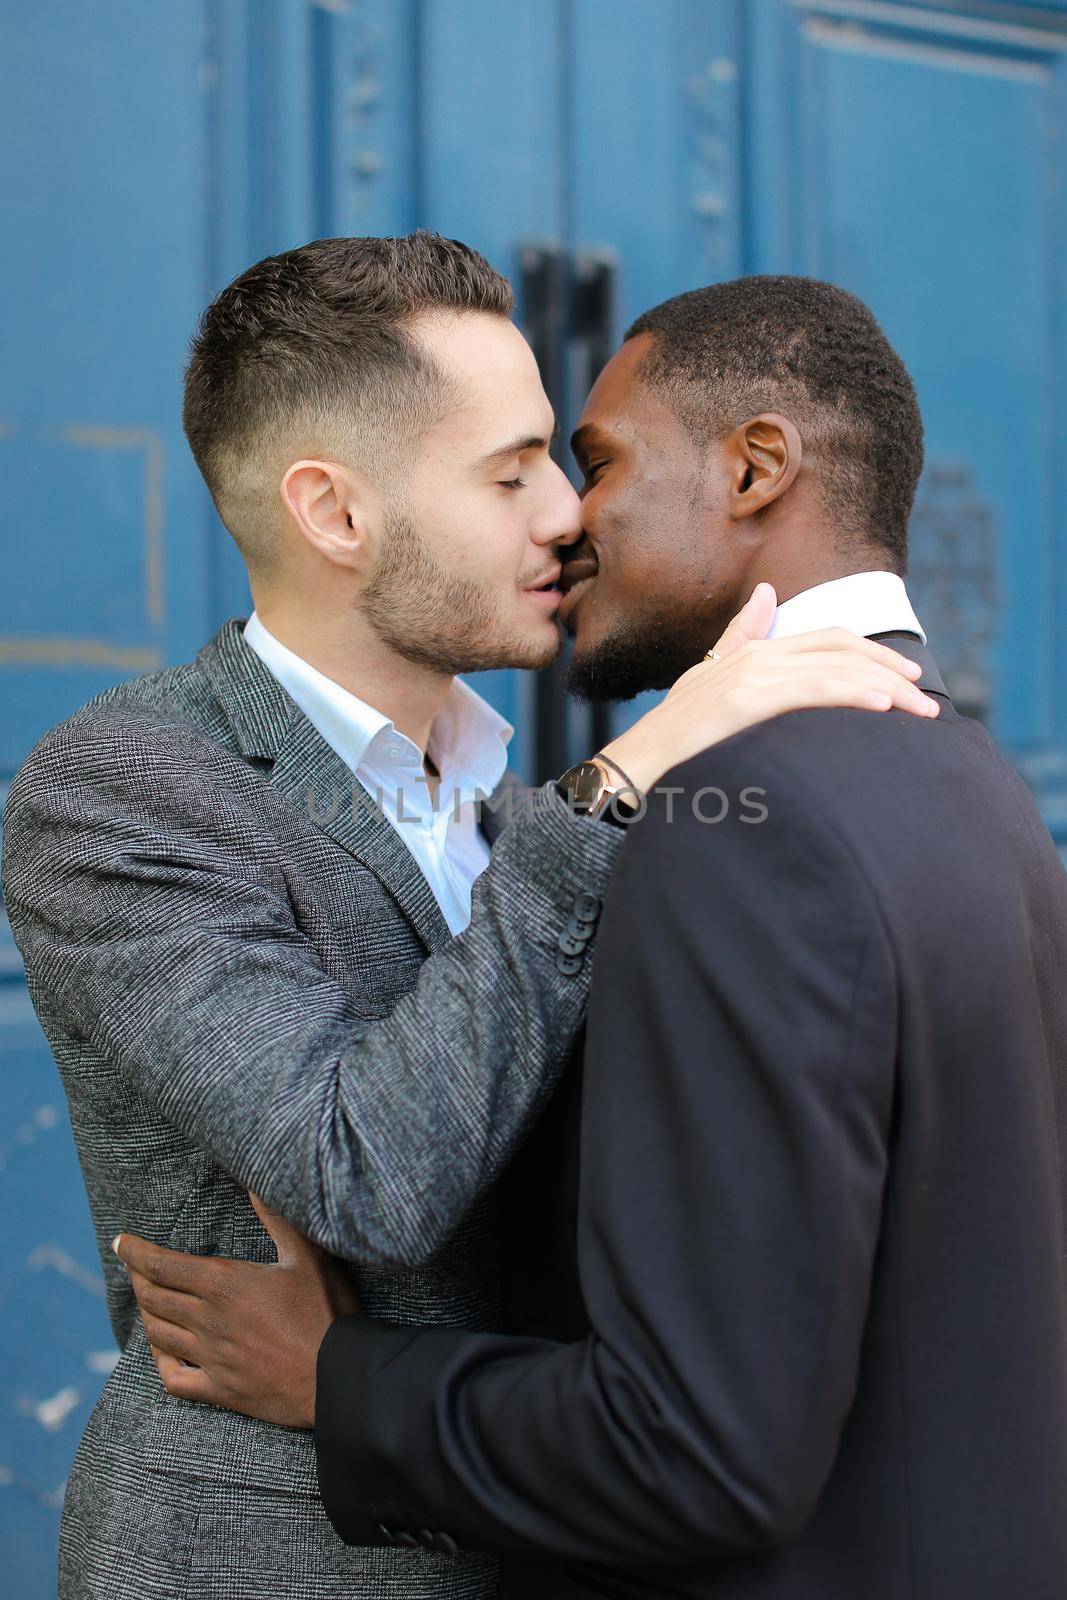 Caucasian happy man kissing afro american boy in door background. by sisterspro